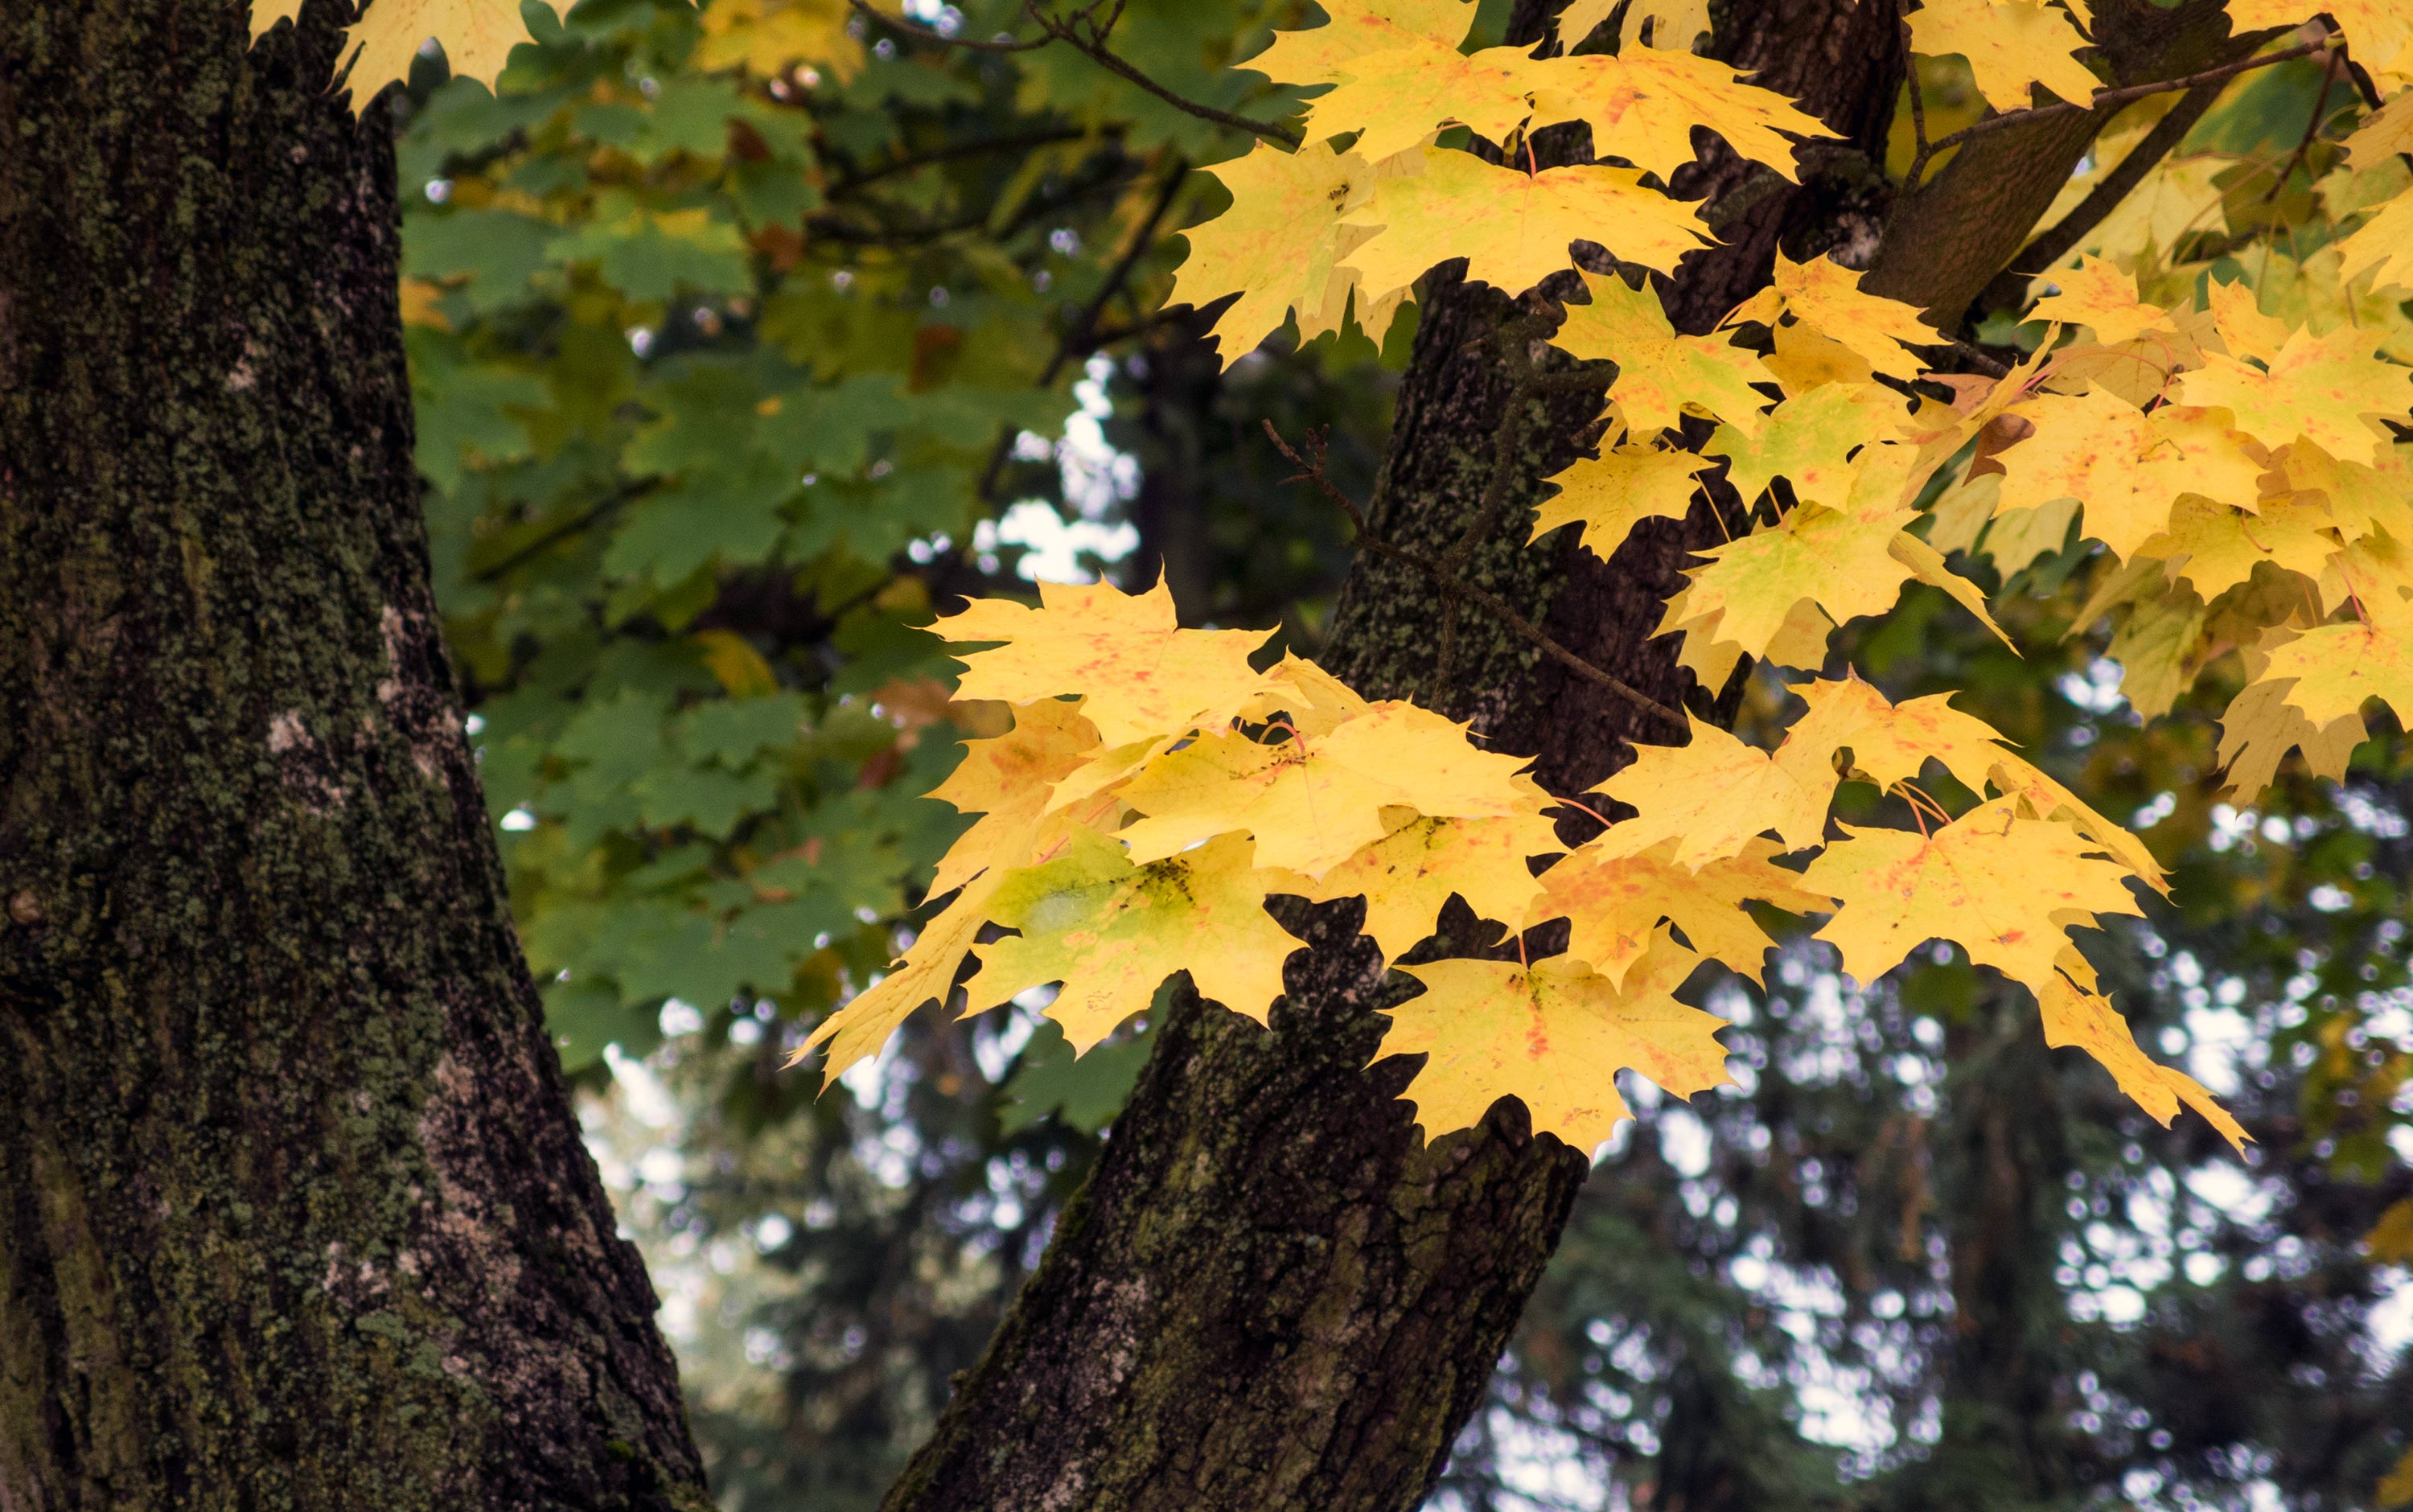 Free Image: Autumn Leaves | Libreshot Public Domain Photos